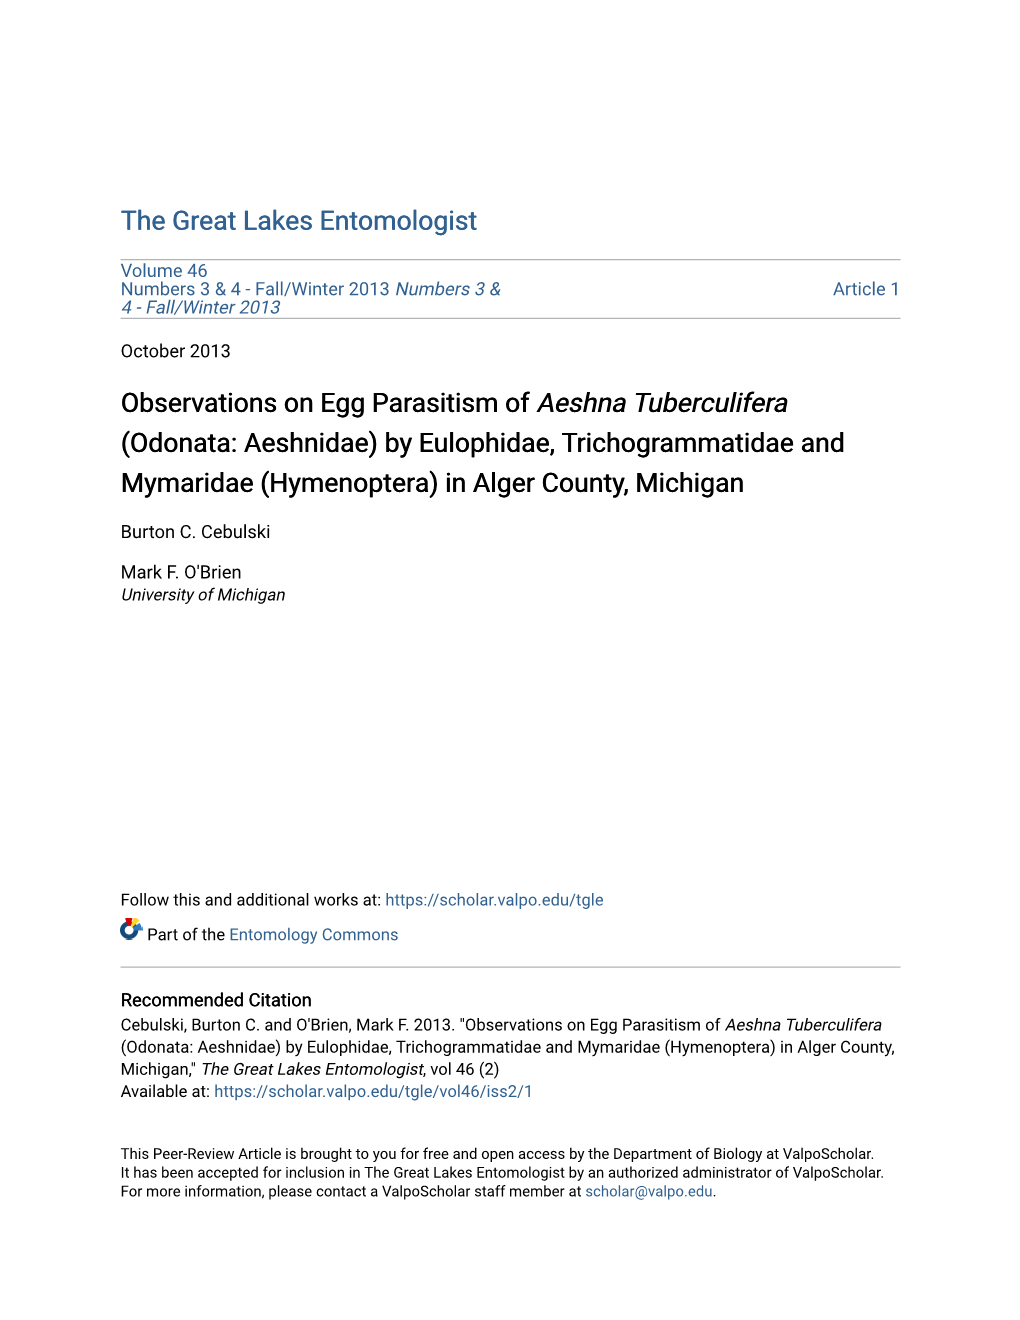 Observations on Egg Parasitism of Aeshna Tuberculifera (Odonata: Aeshnidae) by Eulophidae, Trichogrammatidae and Mymaridae (Hymenoptera) in Alger County, Michigan